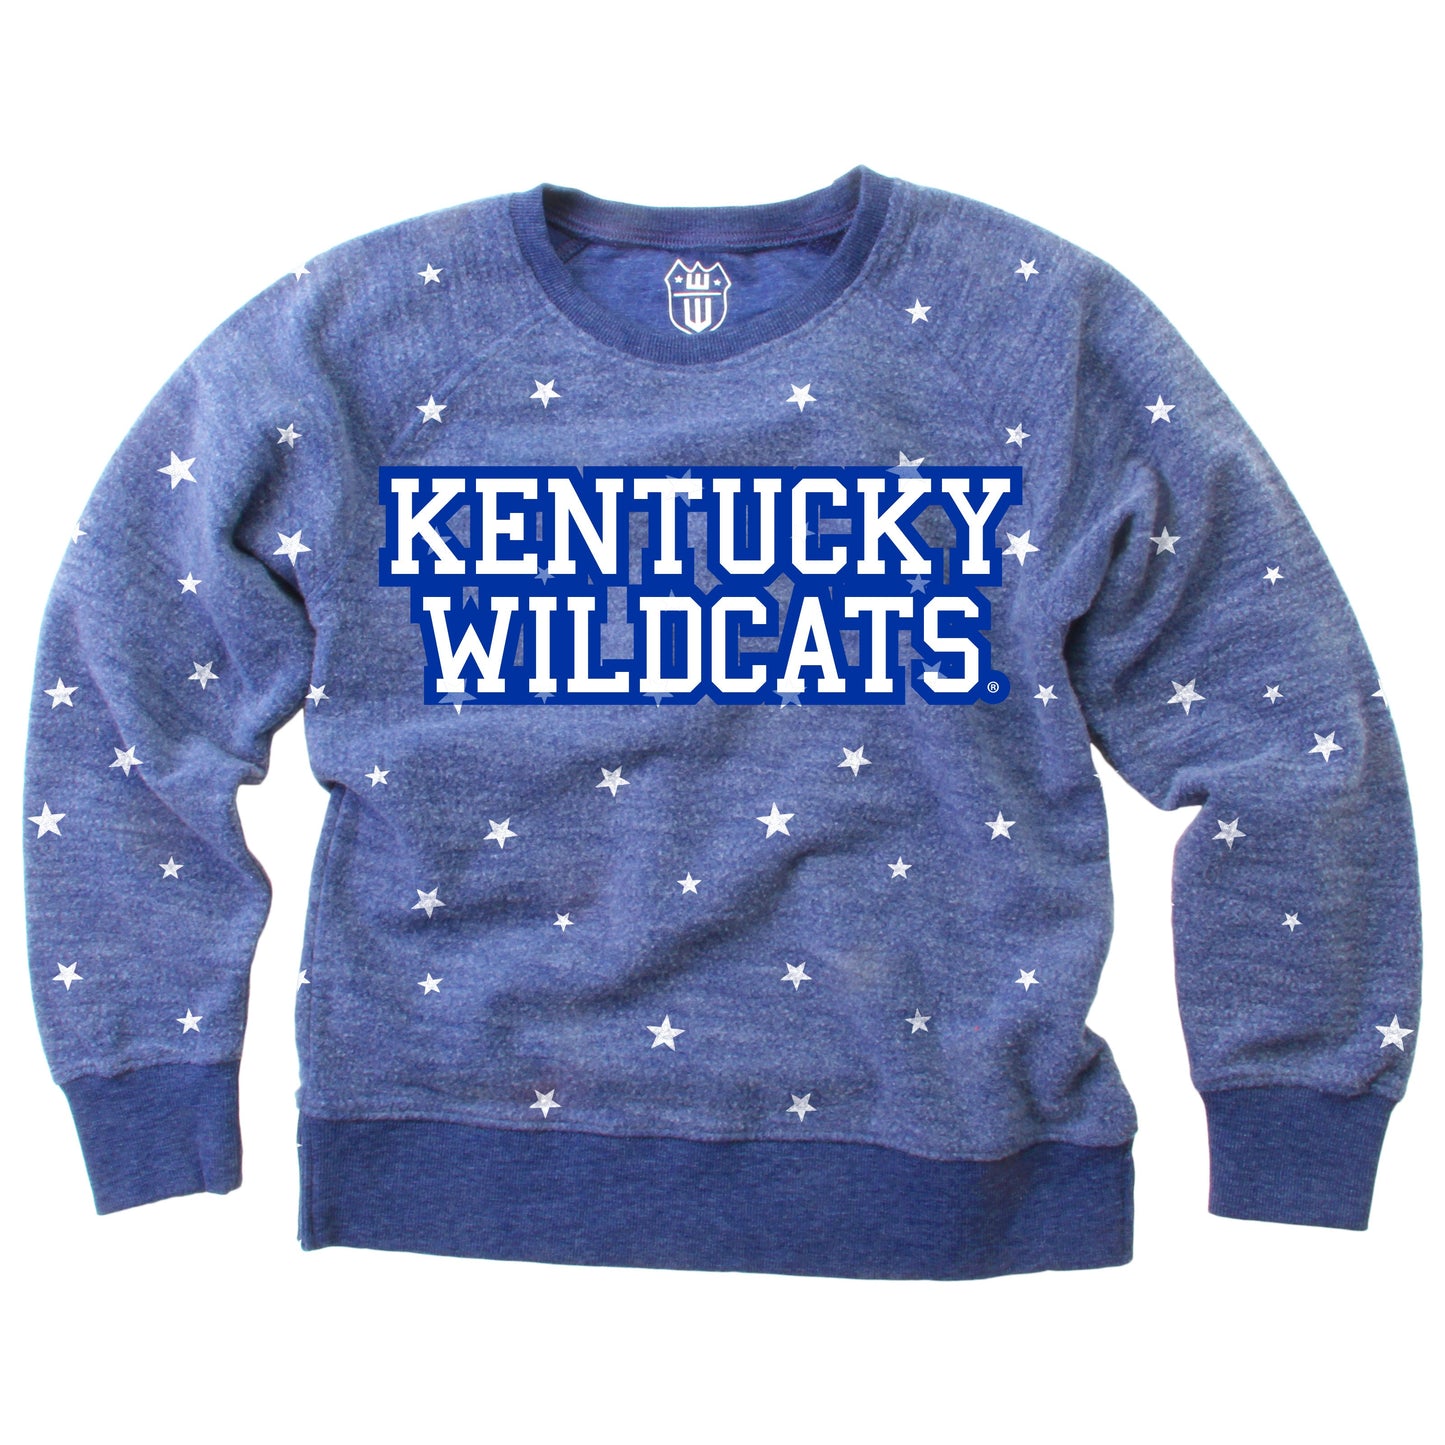 Kentucky Wildcats youth Allover Star Fleece Top